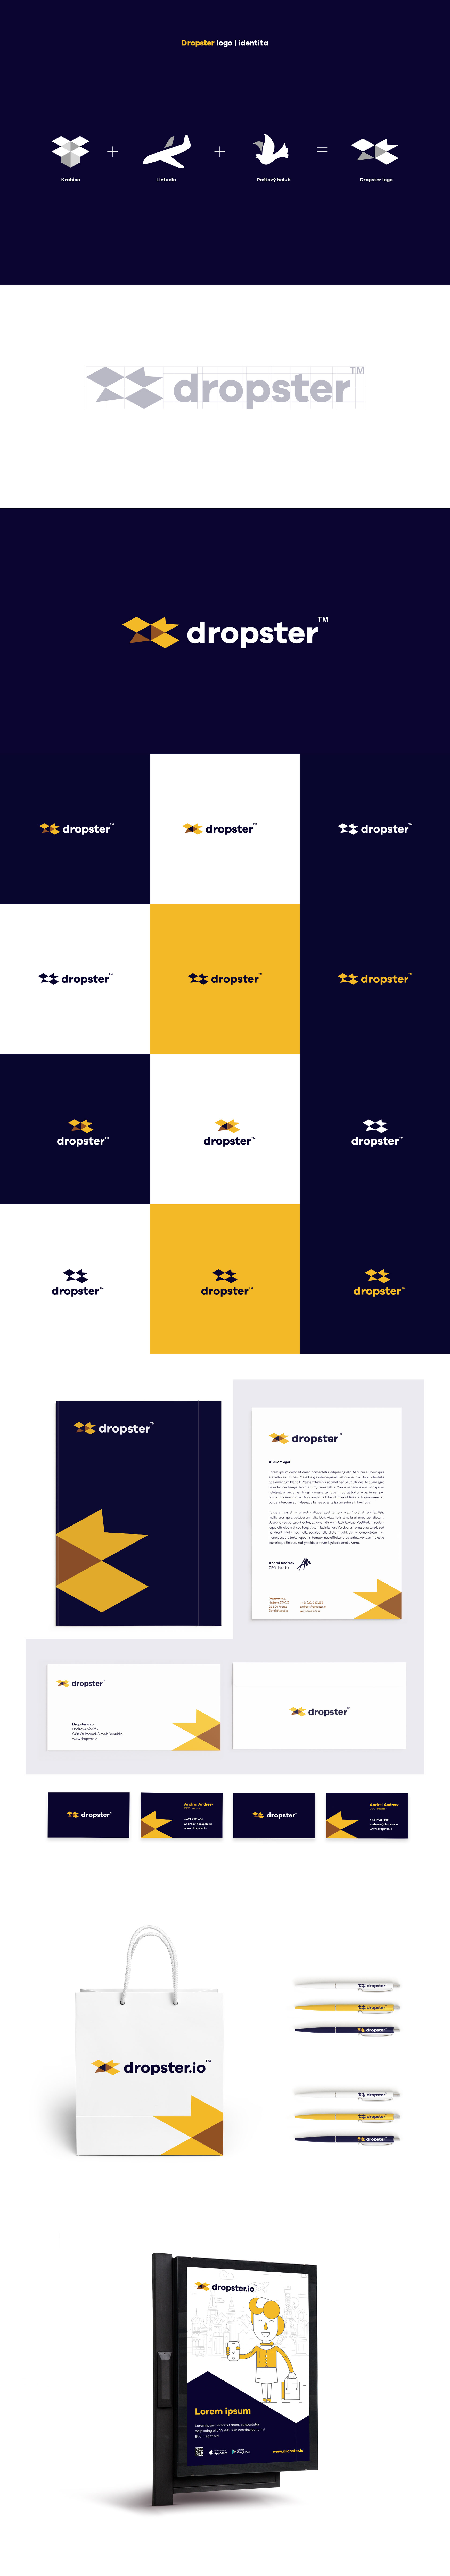 dropster_logo-11